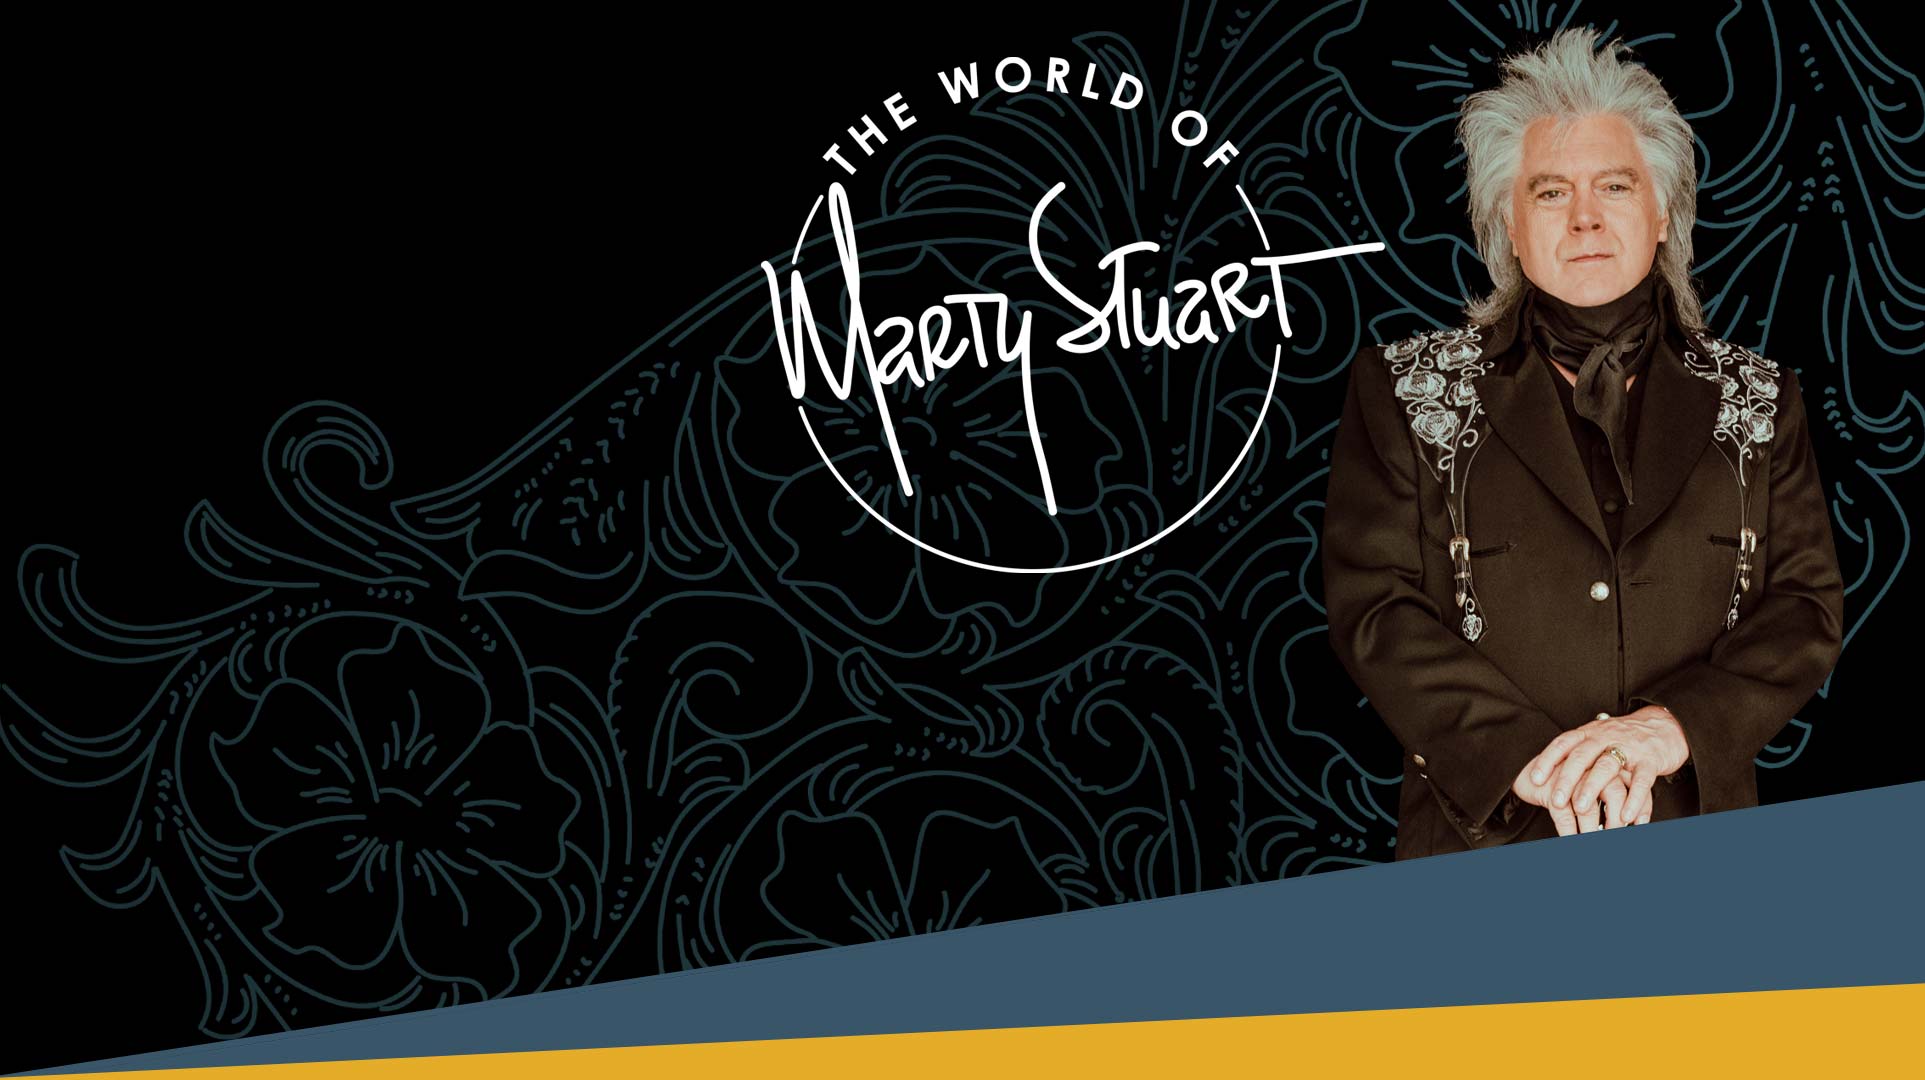 The World of Marty Stuart